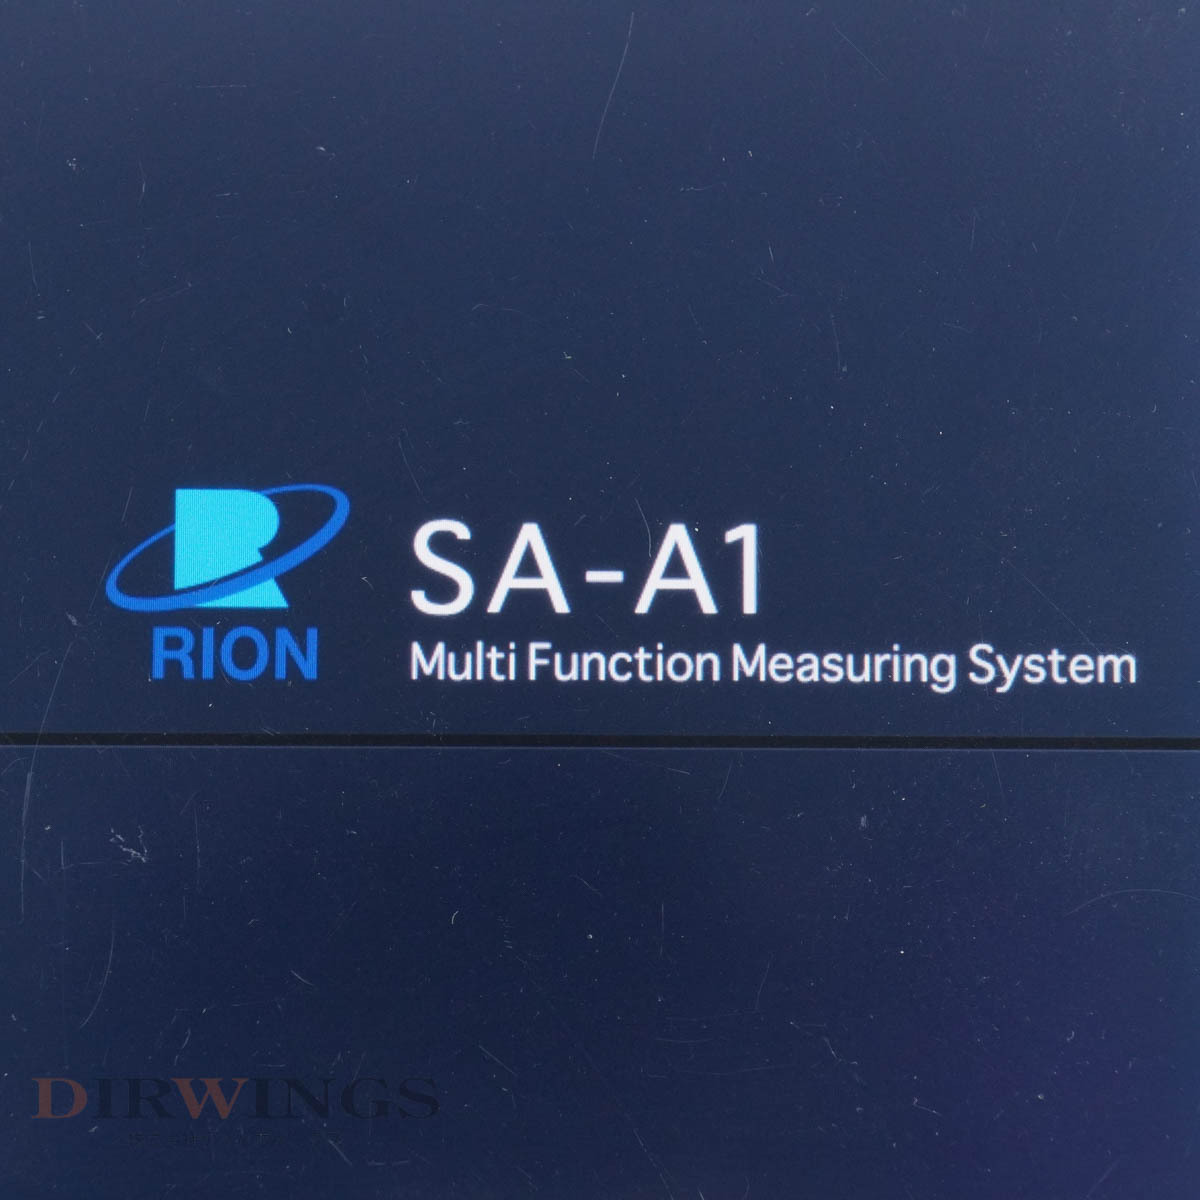 [JB]保証なし SA-A1 SA-A1B4 RION リオン Multi-function Measuring System Platform 多機能計測システム 計測用タブレット..[05890-0182]_画像5